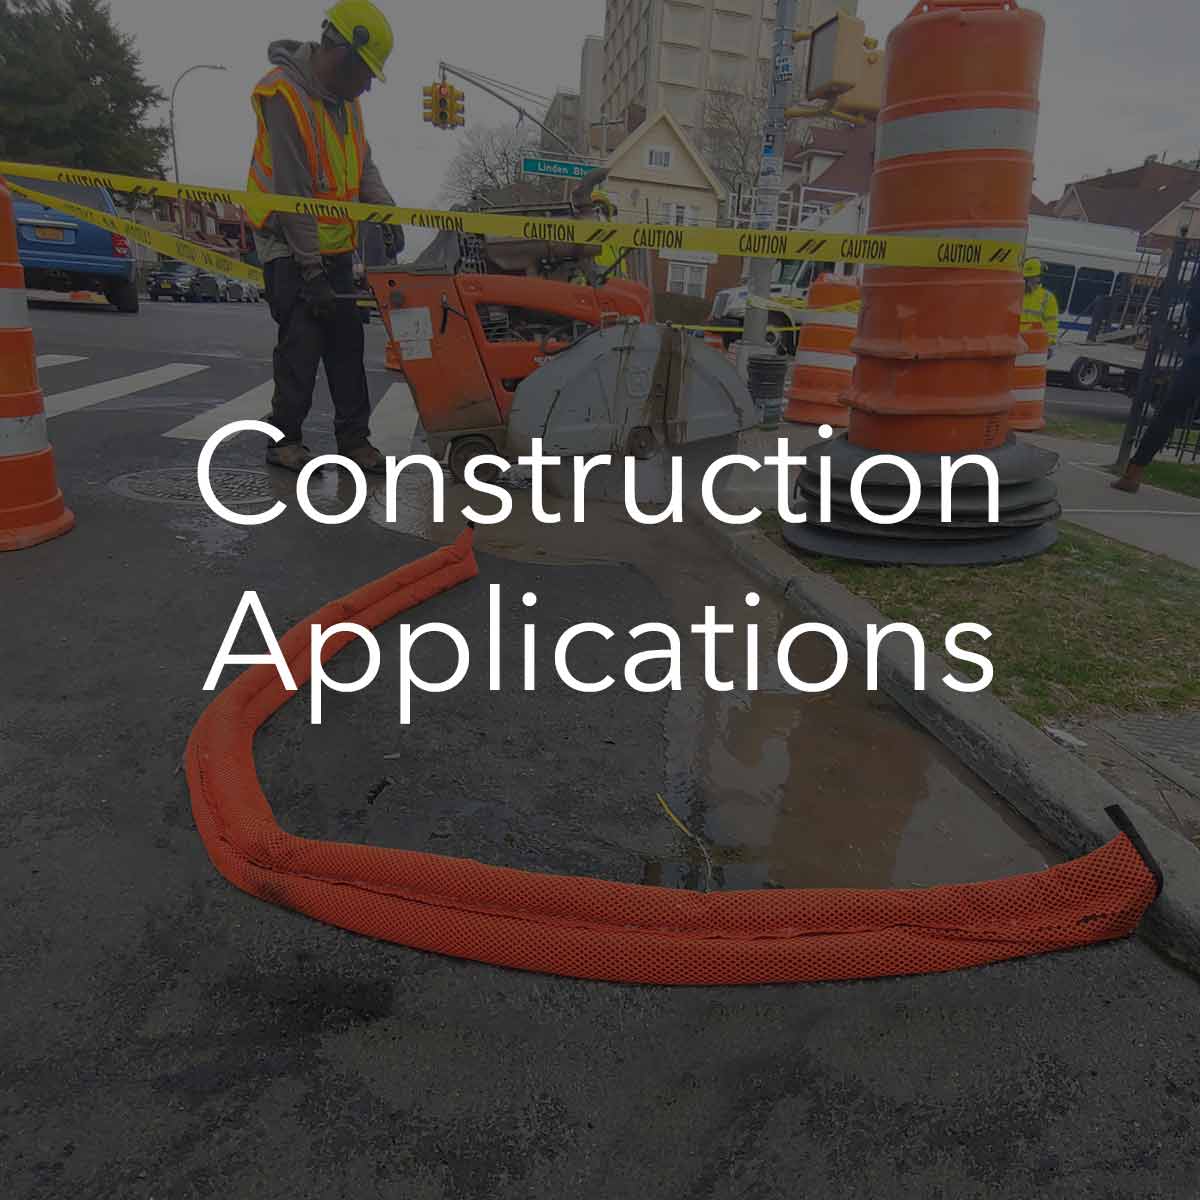 Construction Applications